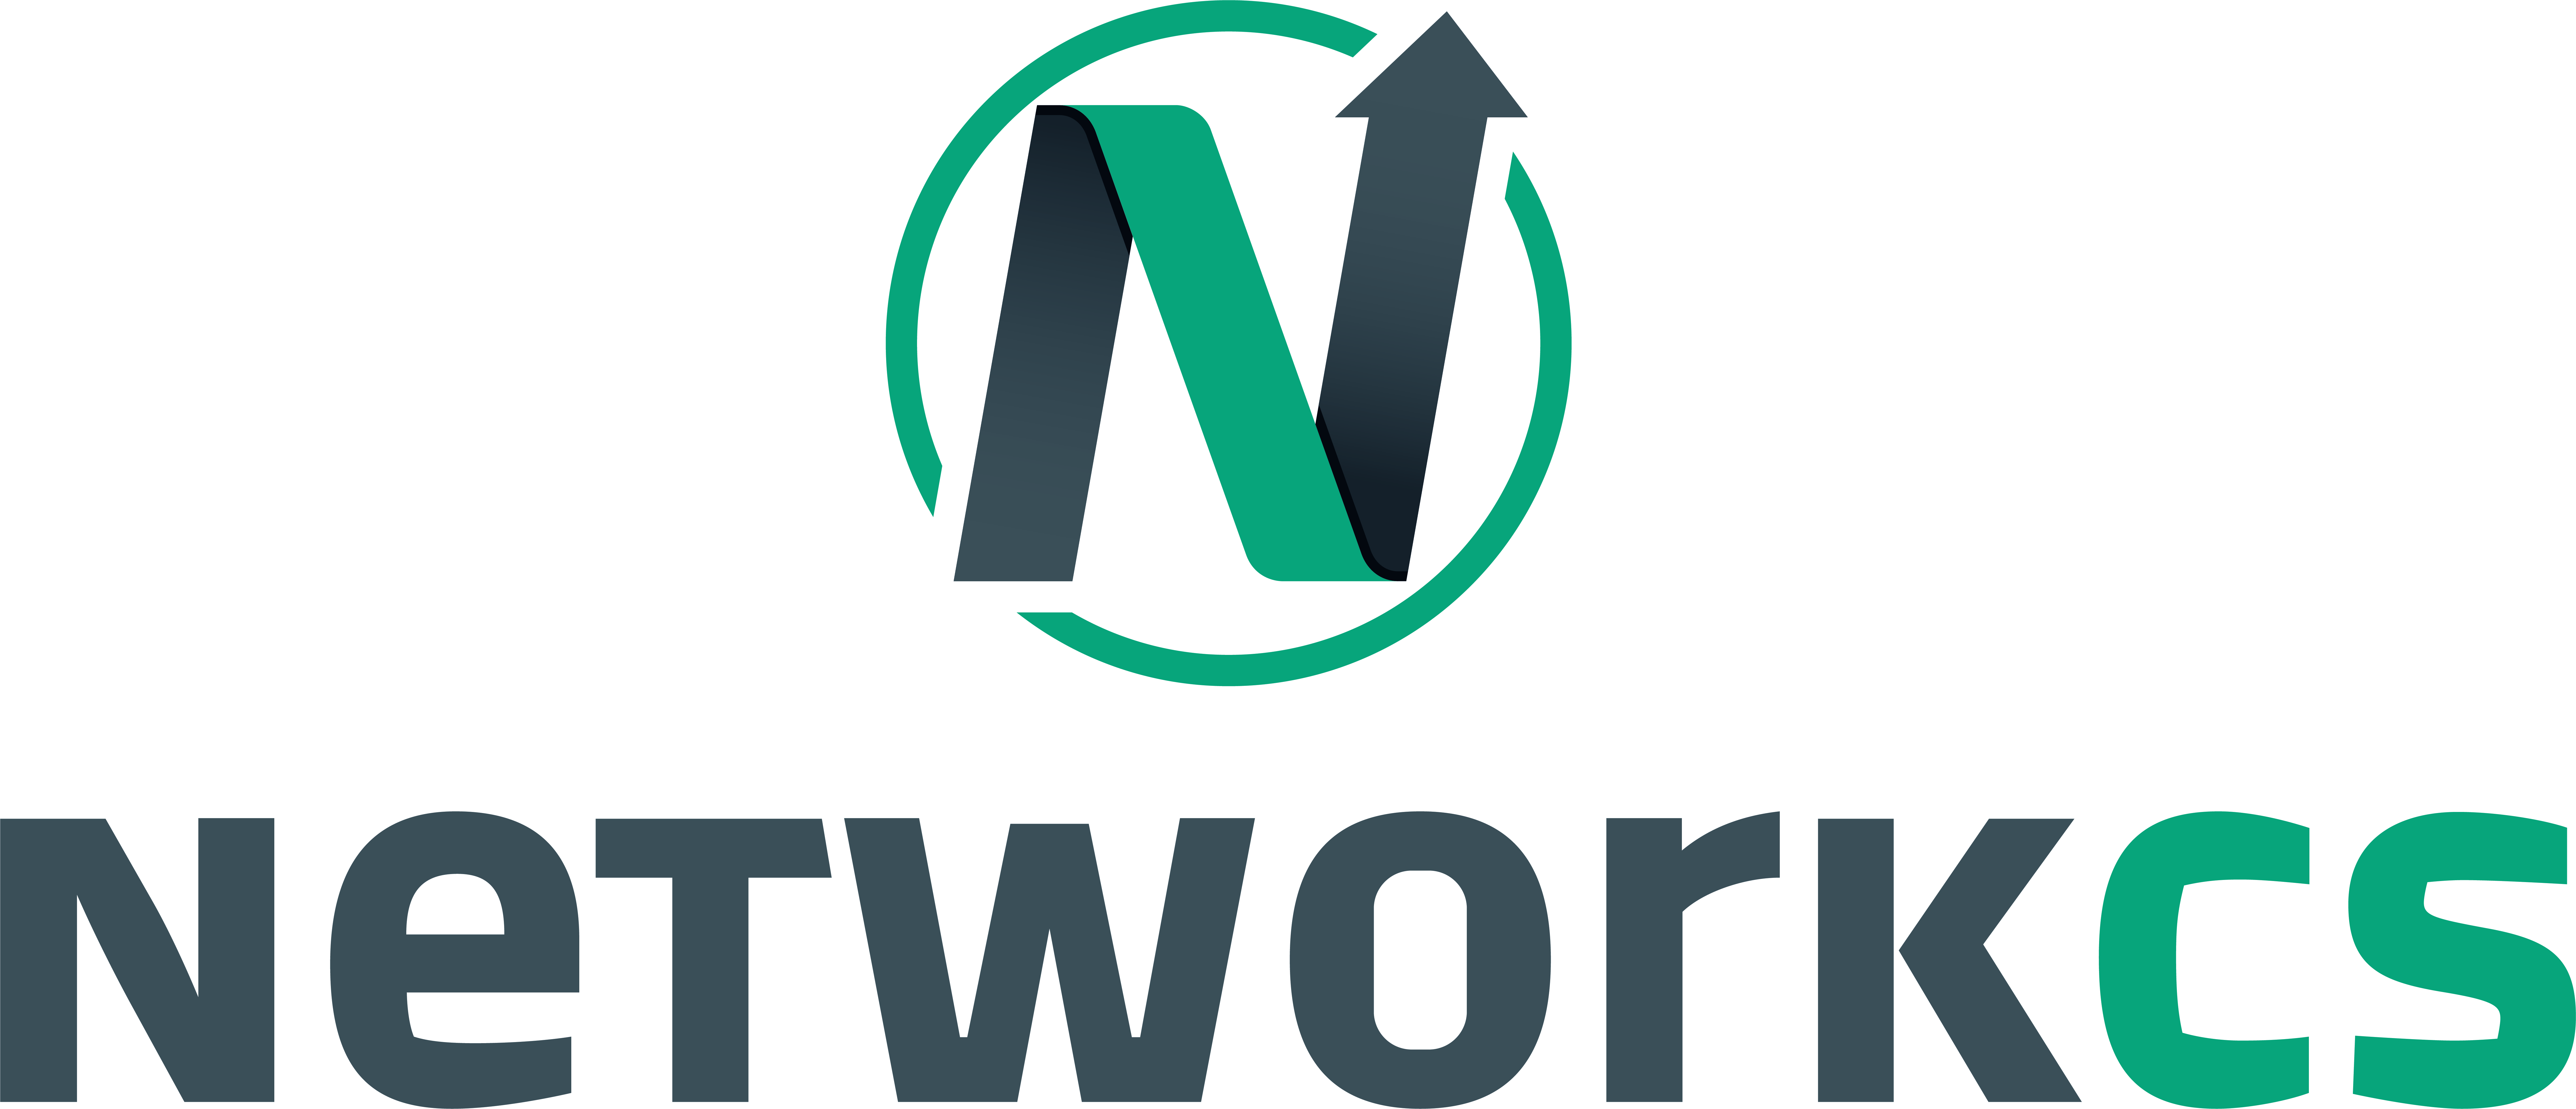 Logotipo networkcs-lona